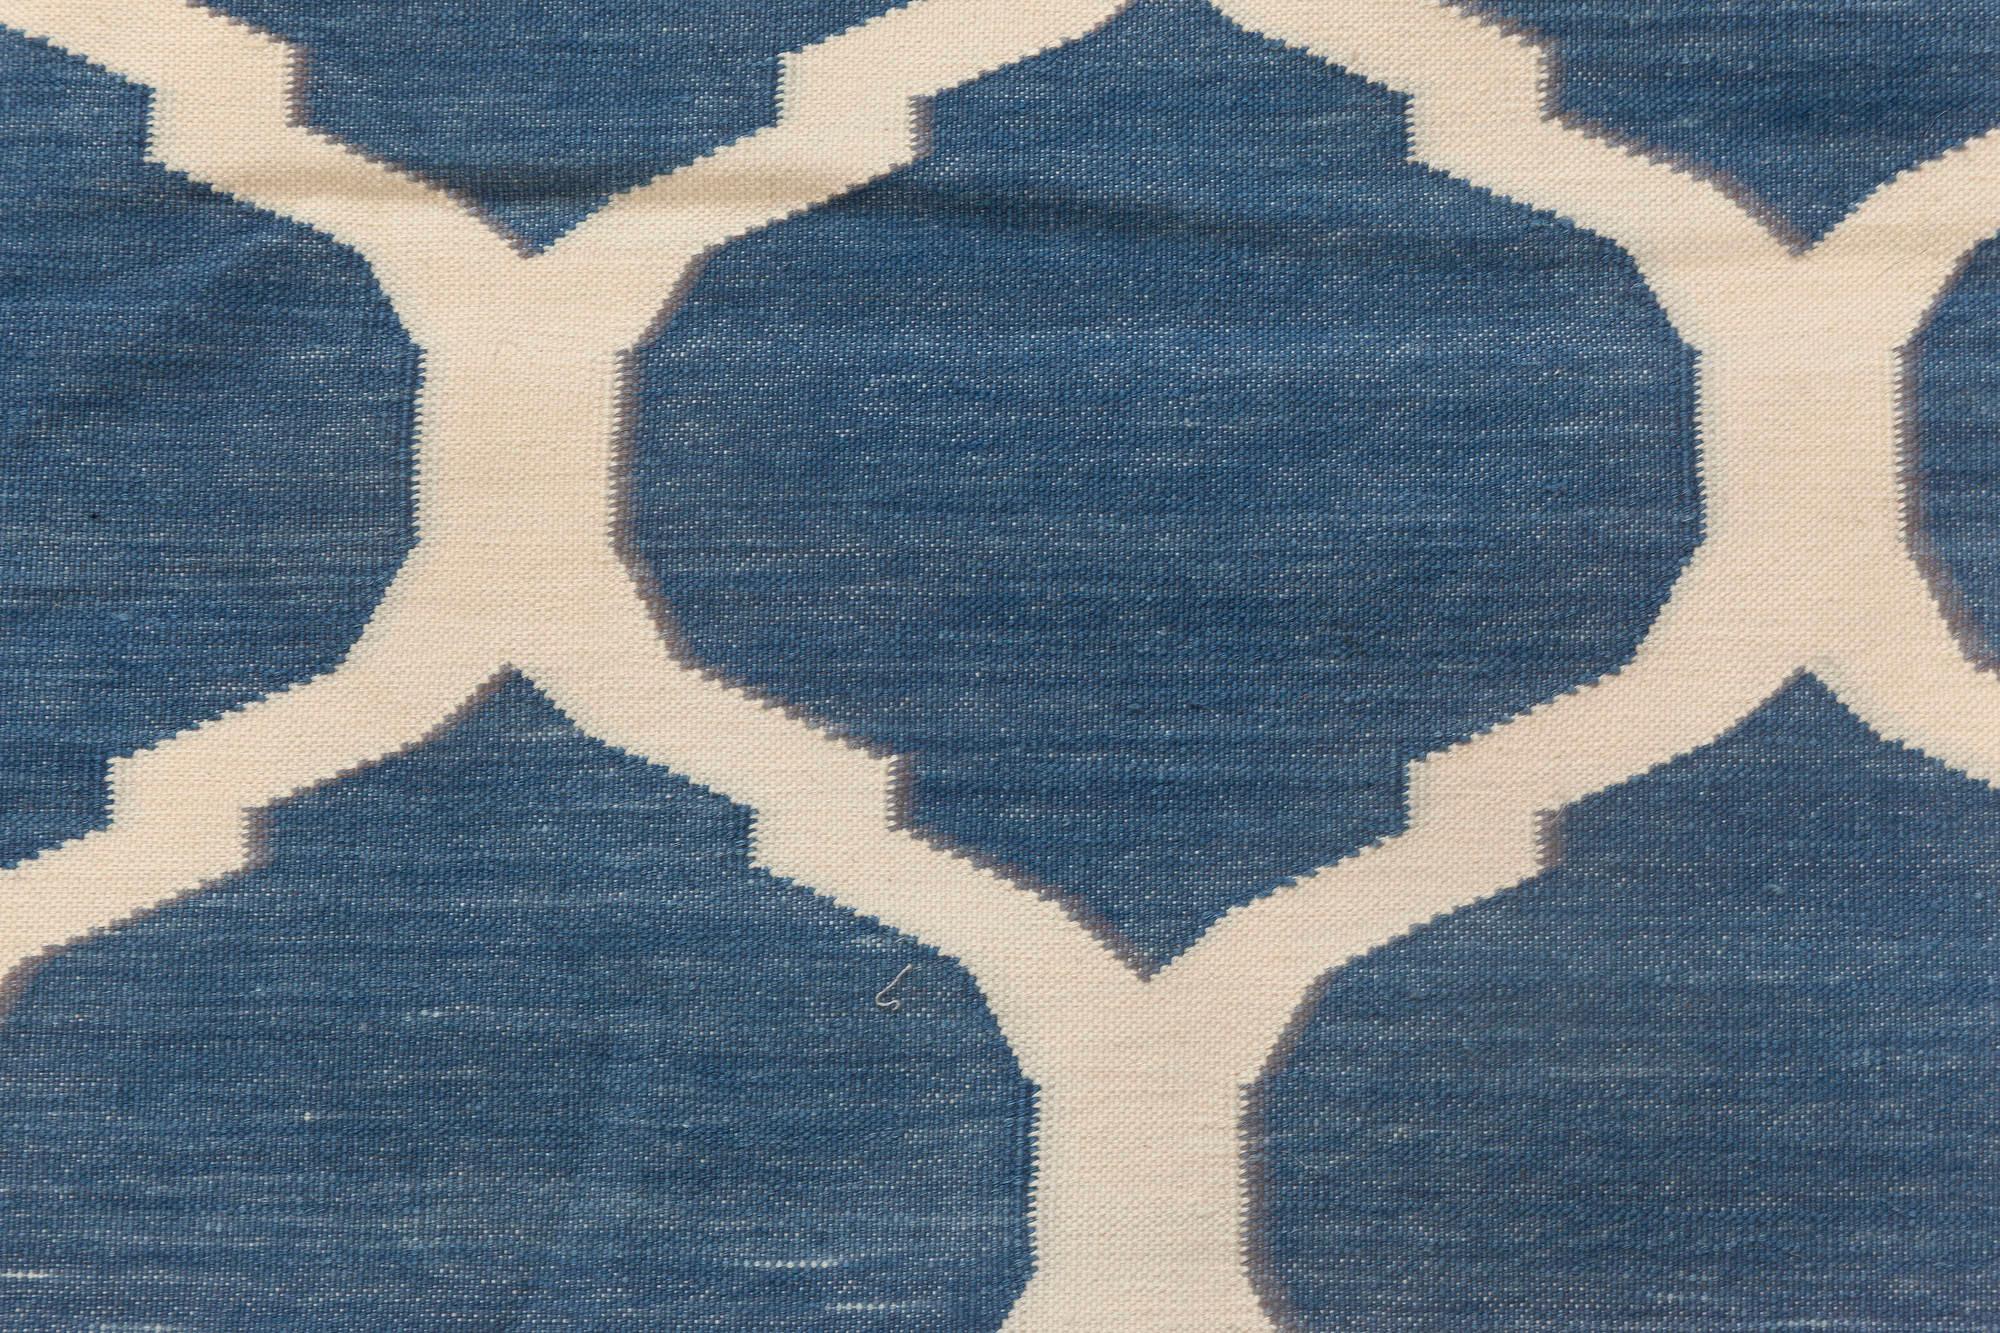 Modern Indian Dhurrie Design Blue and White Handmade Cotton Rug by Doris Leslie Blau For Sale